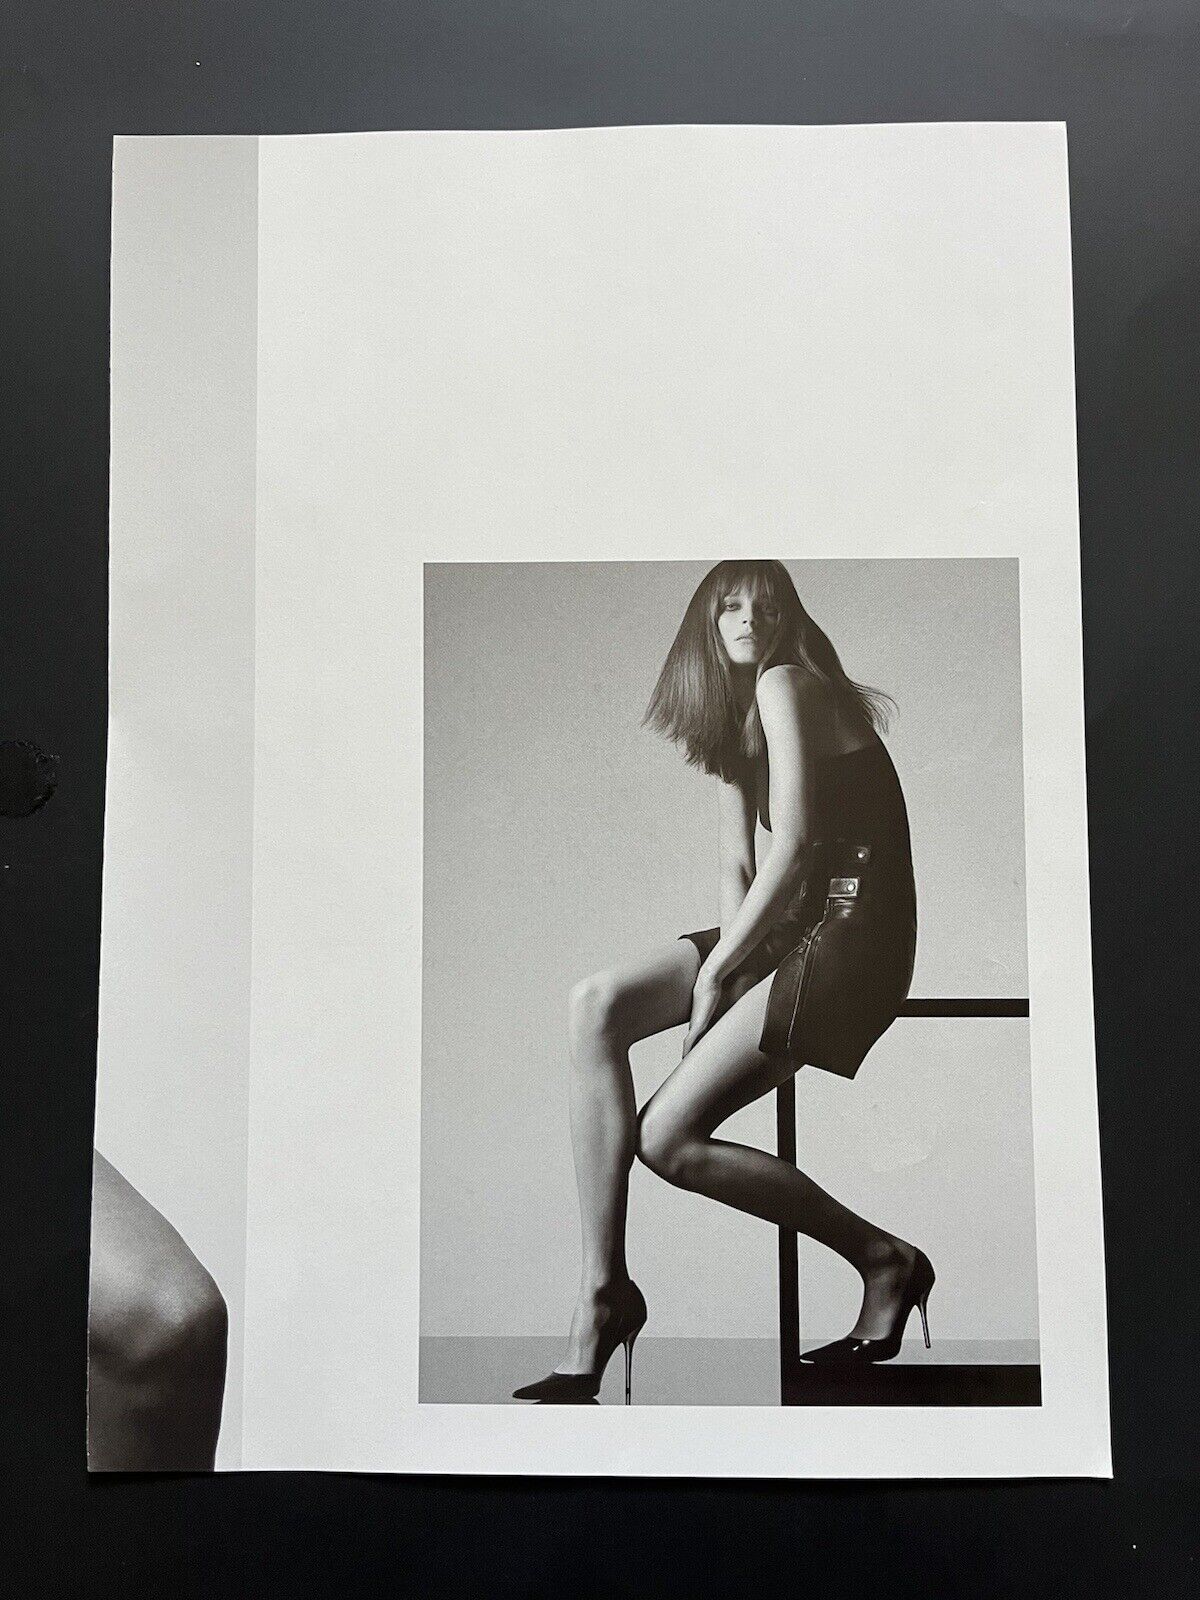 Woman Footwear Magazine Print Ad Advert  long legs high heels shoes  VG 2003